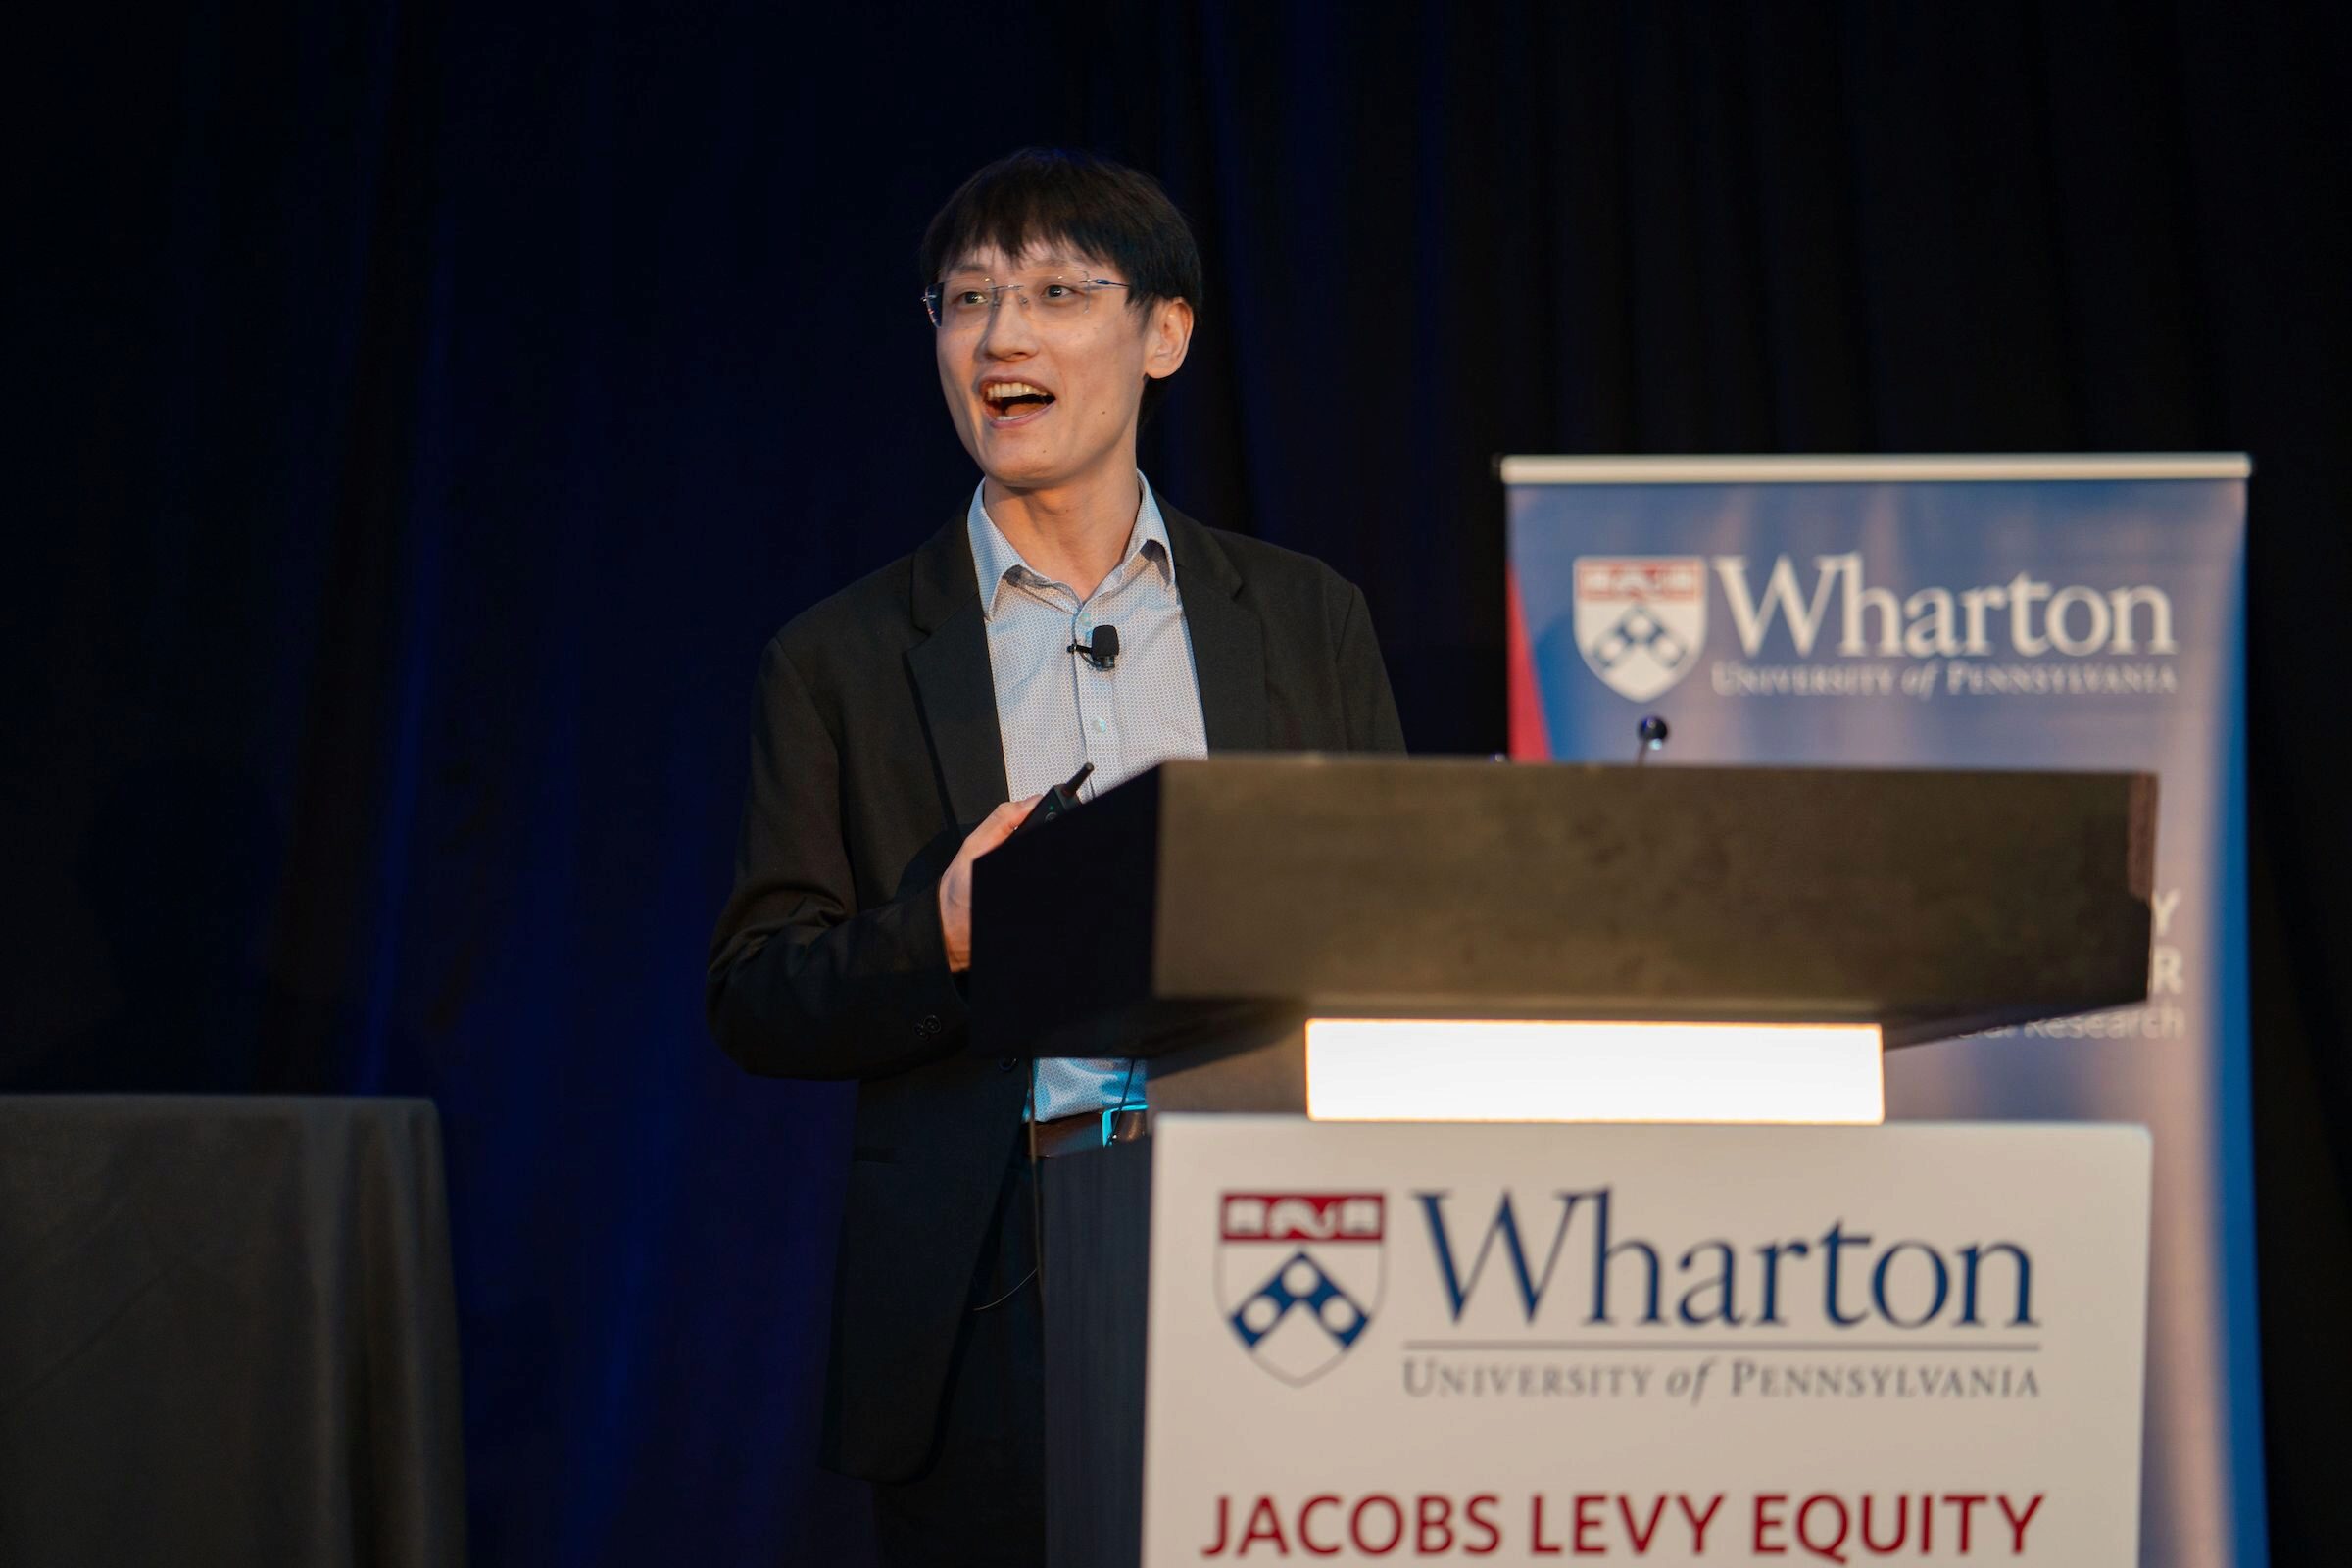 Yao Zeng speaking at a Wharton podium